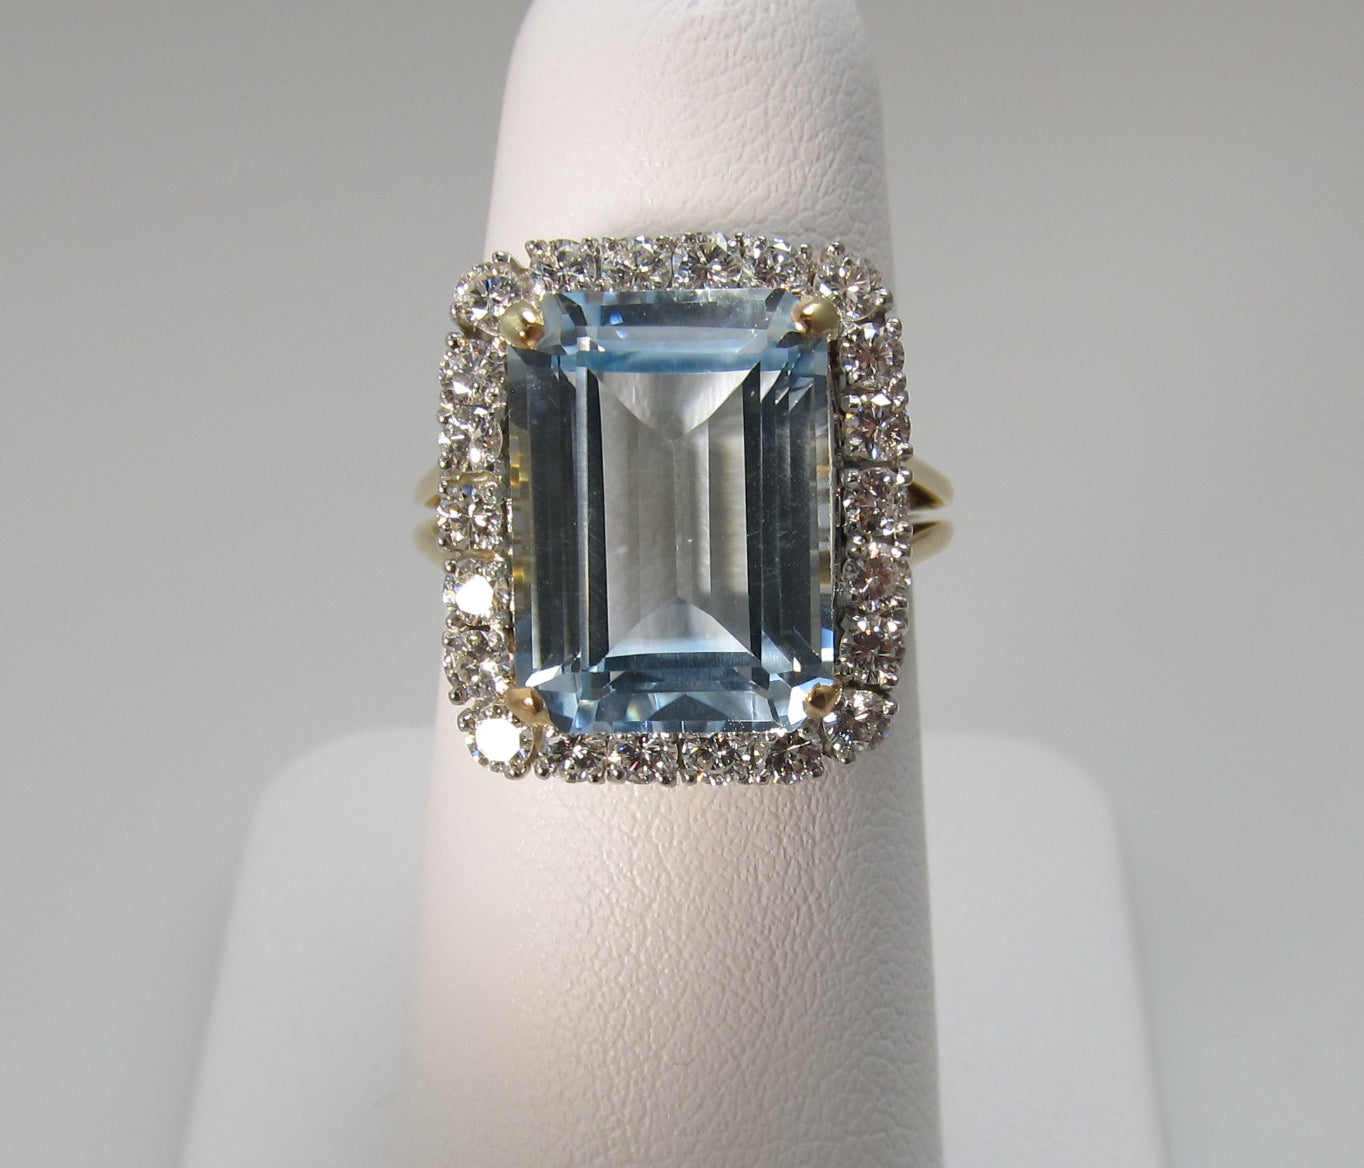 18k and platinum ring with aquamarine and diamond